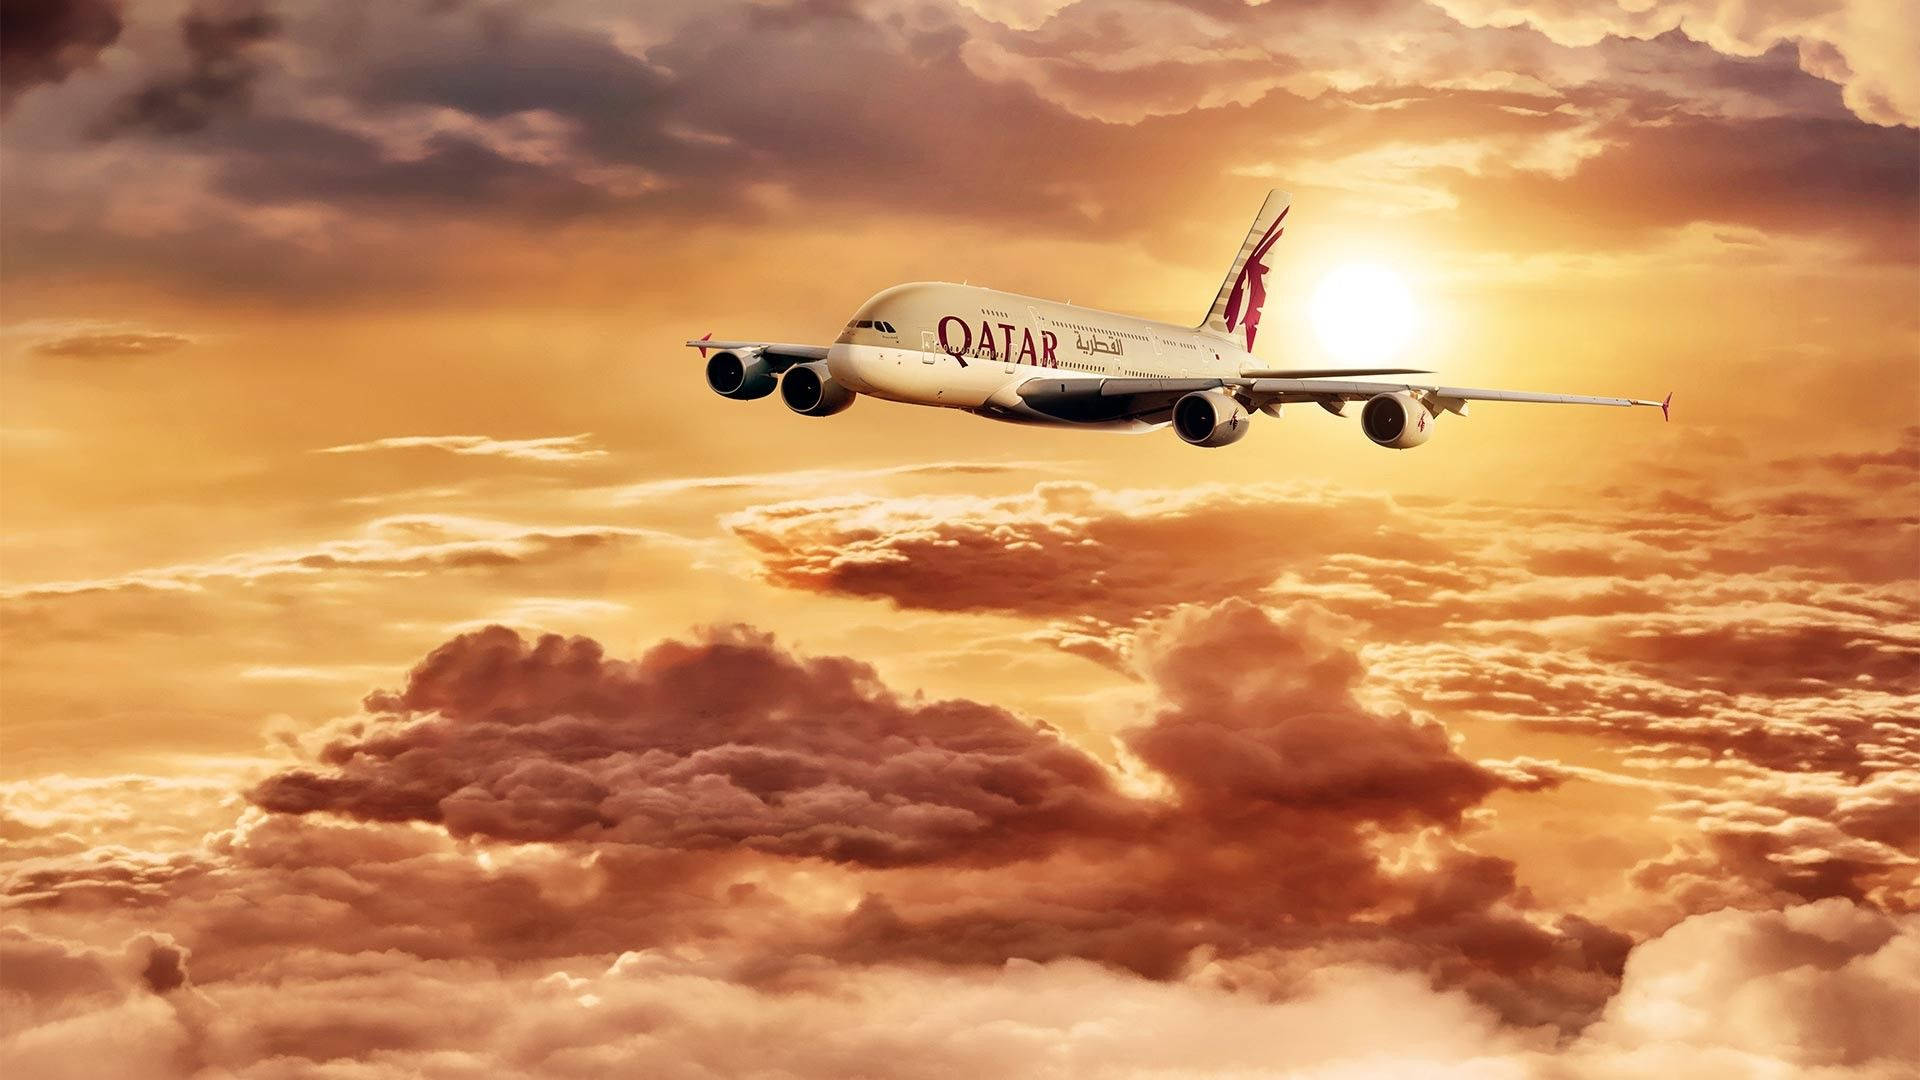 Qatar Aircraft In Vast Sky Background